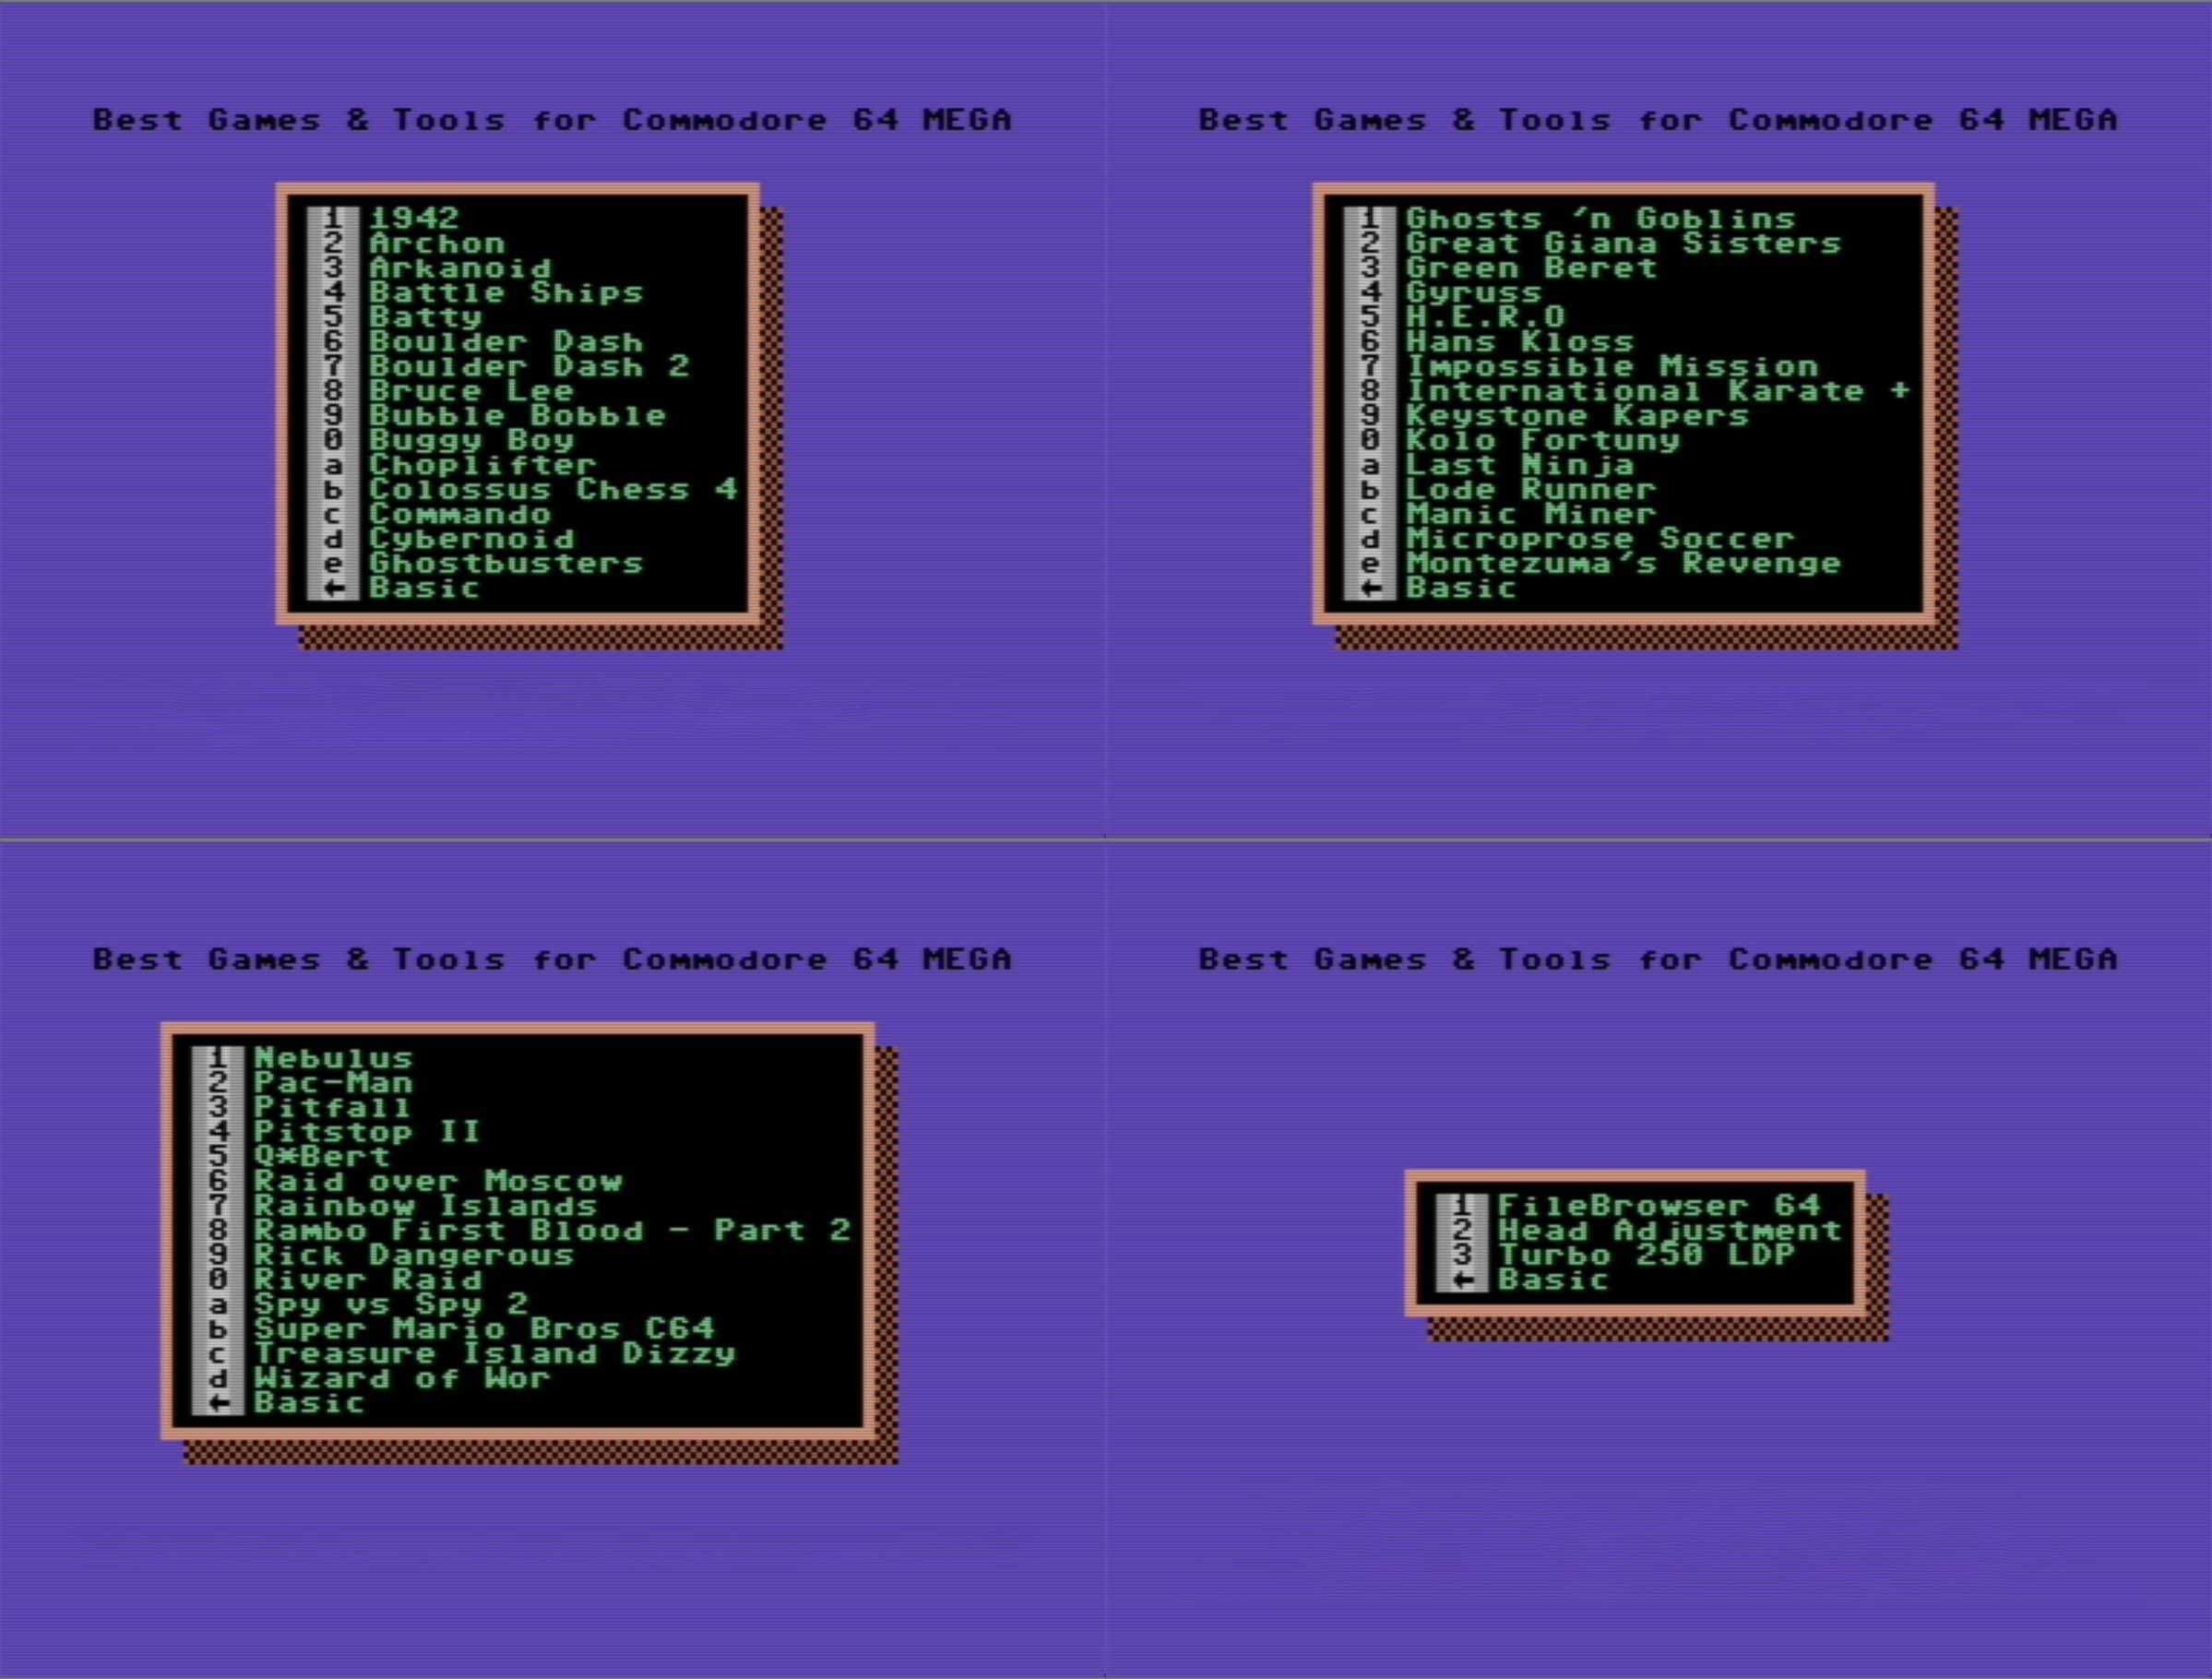 Kartridż Kartridże Best Games & Tools for Commodore 64 - gry C64